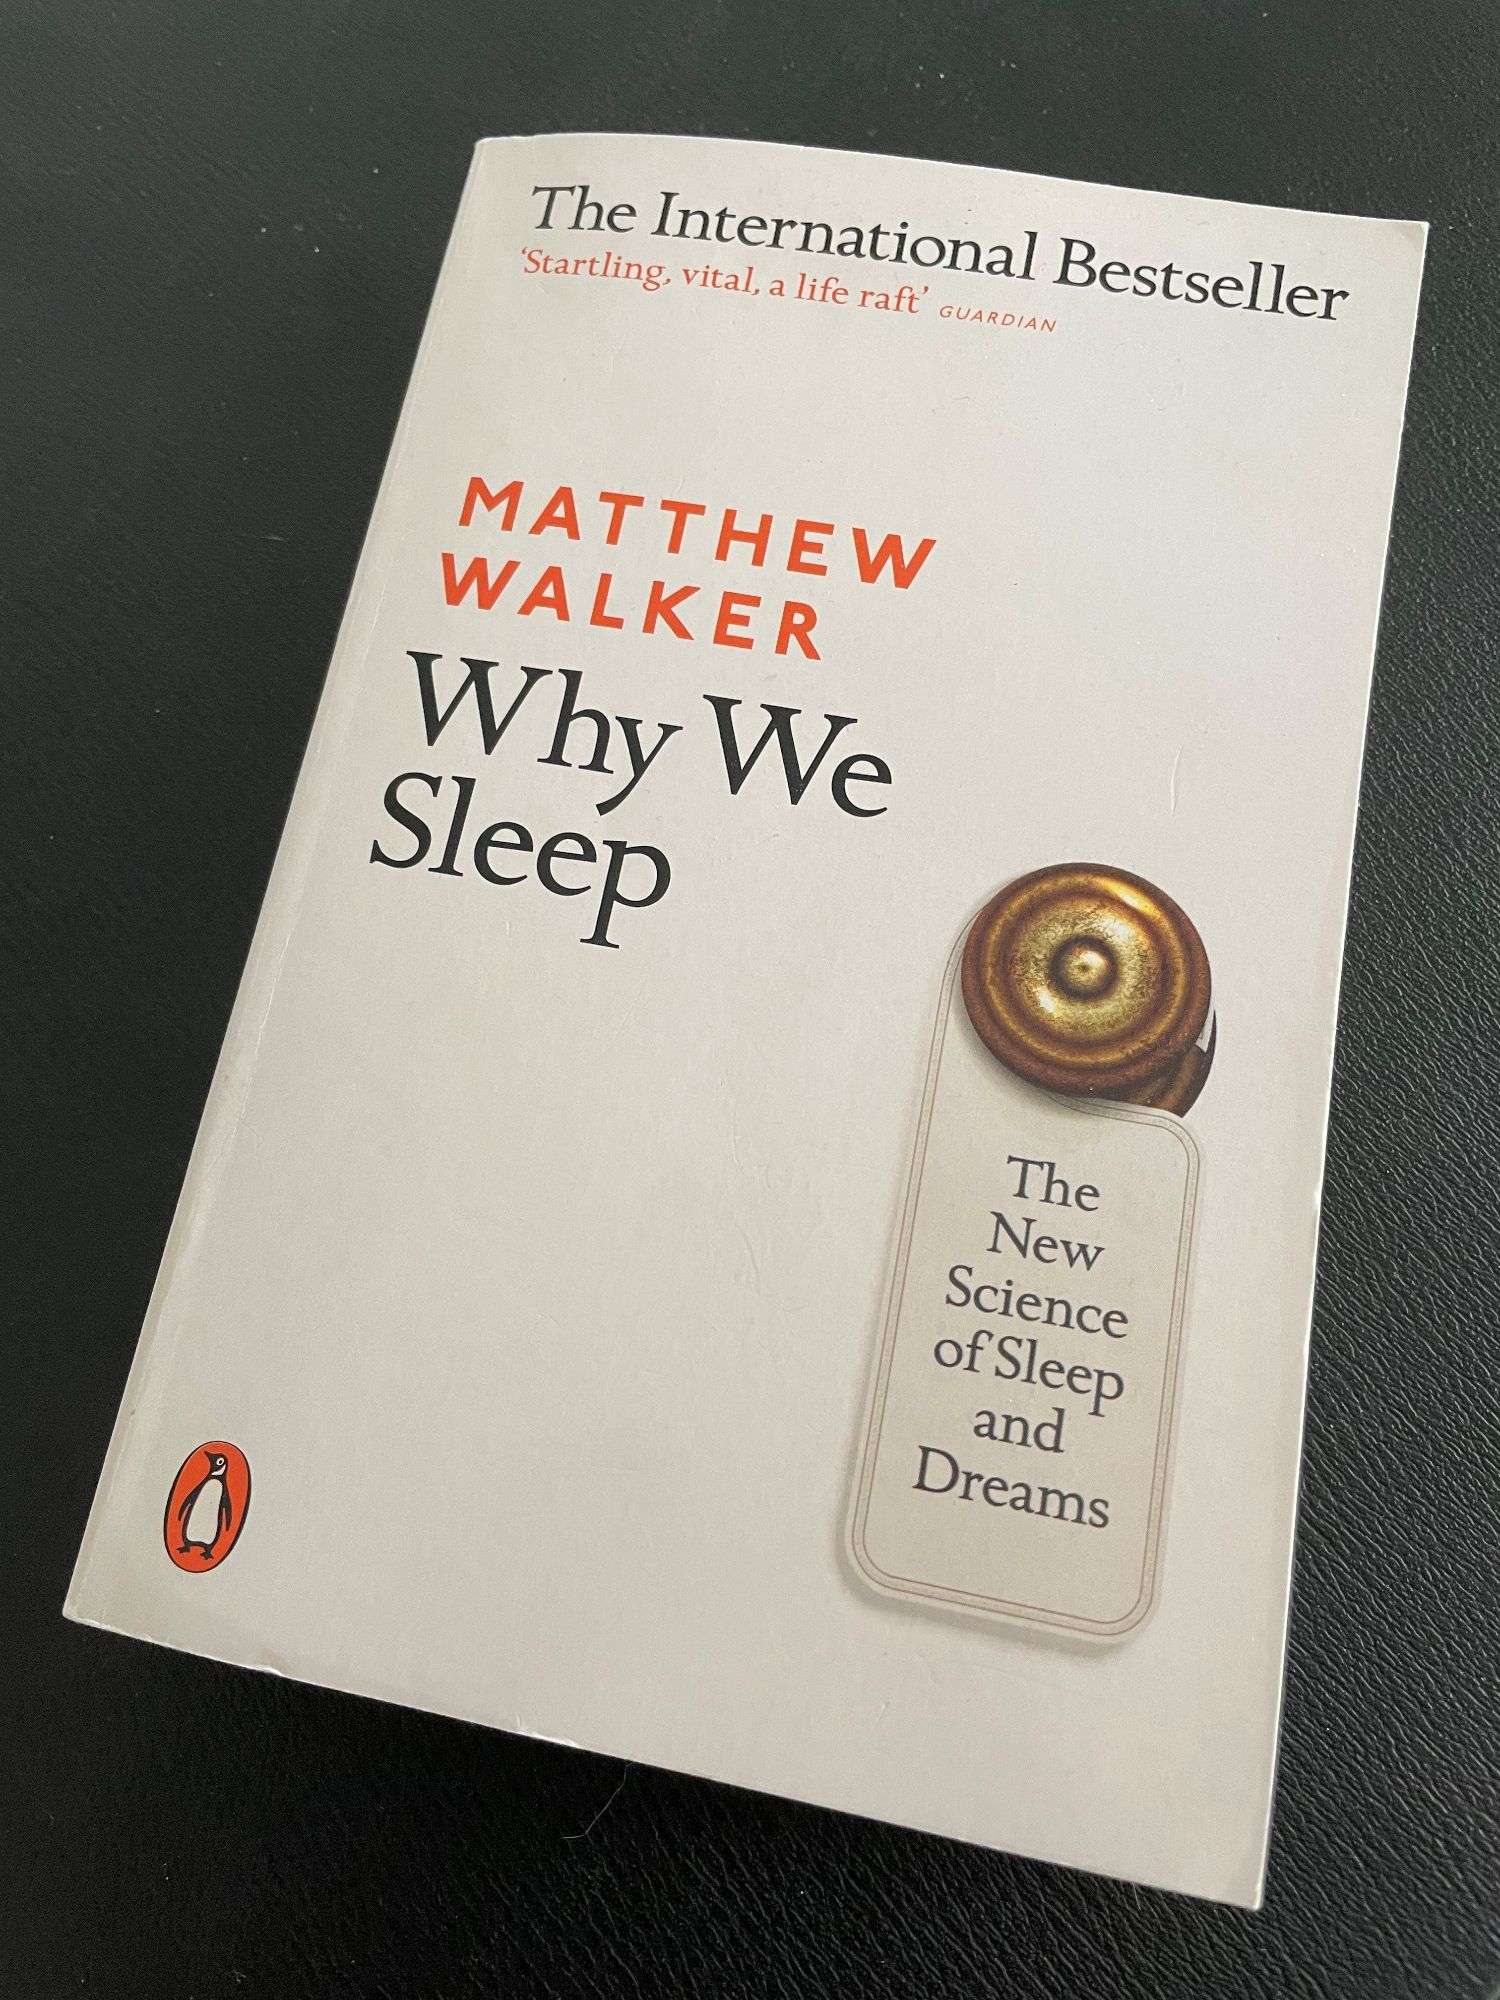 Why we sleep by Matthew Walker